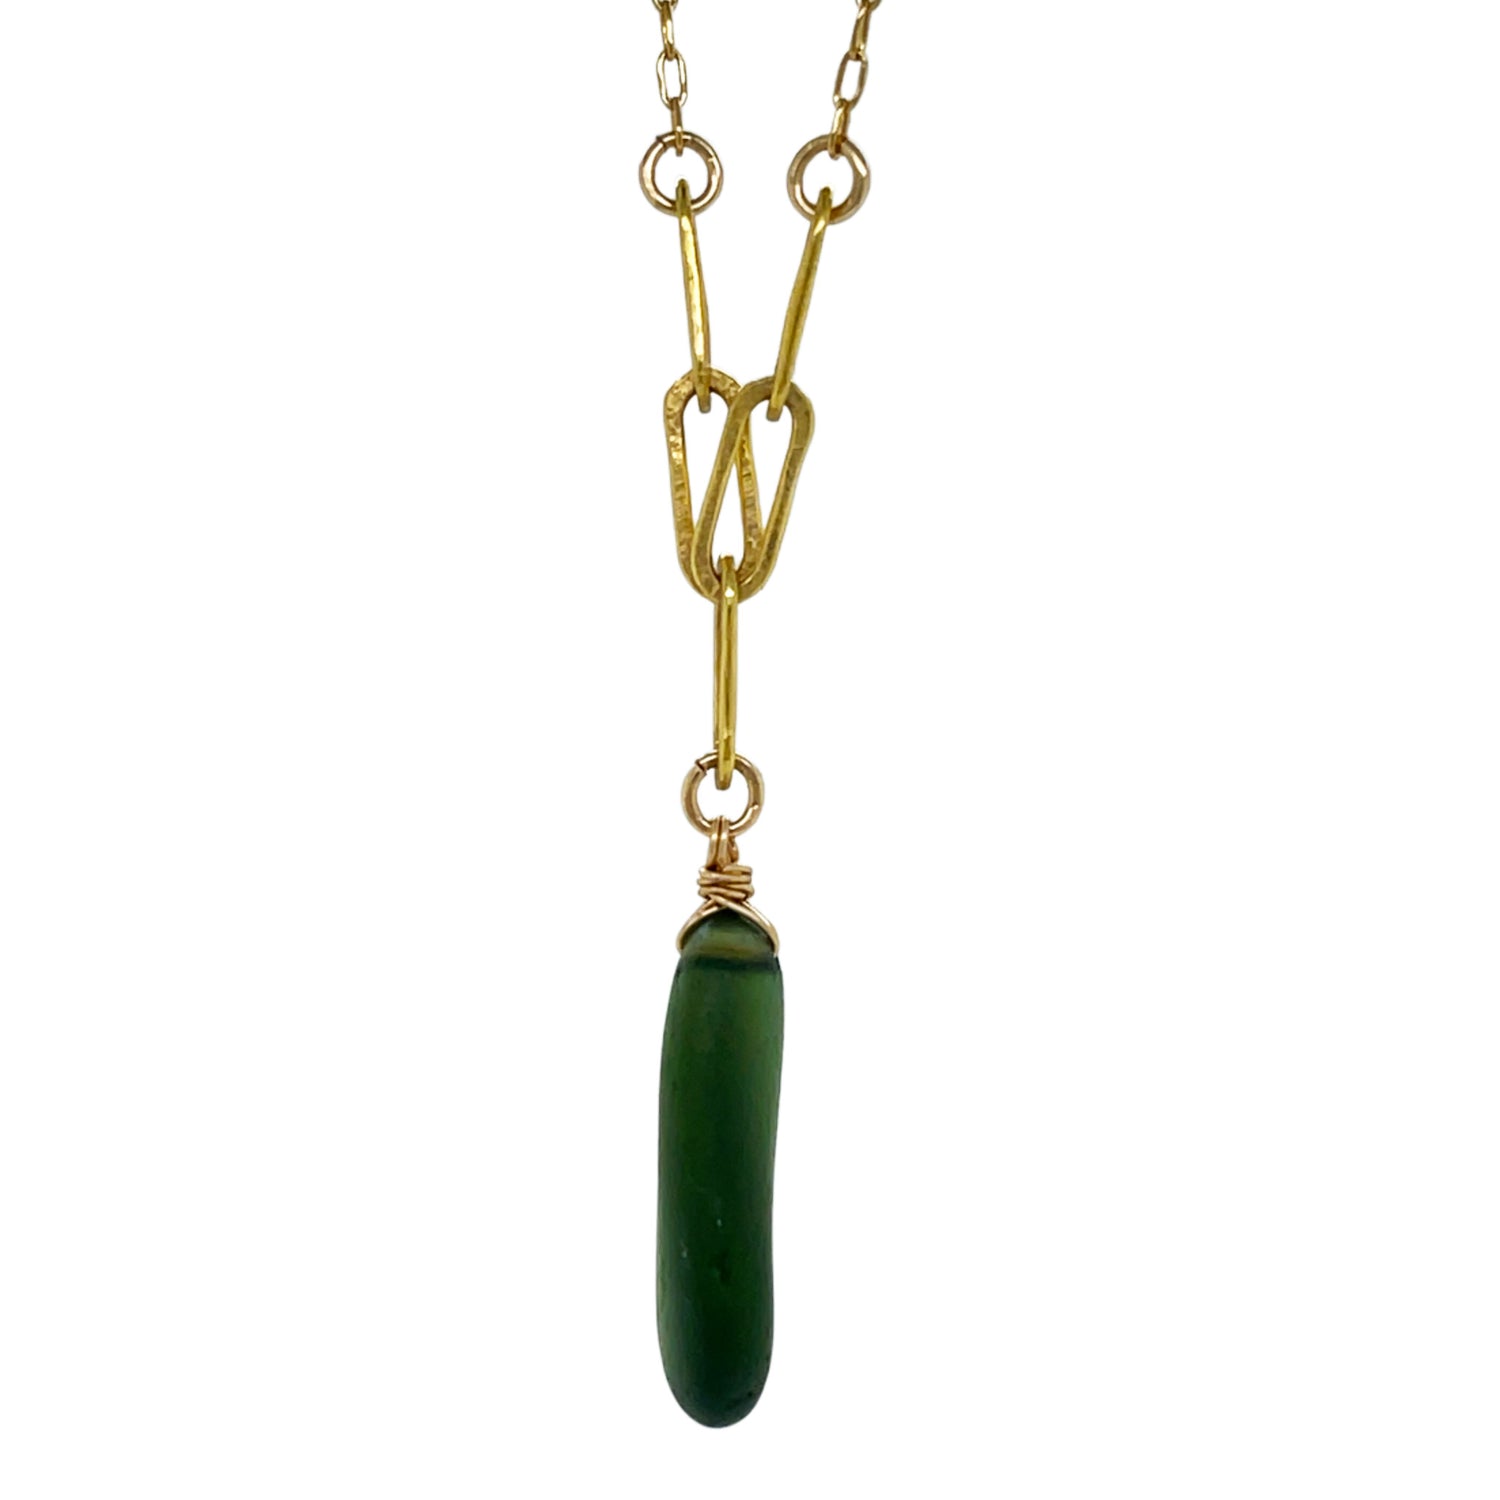 Handmade gold necklace featuring genuine antique sea glass Australian Made